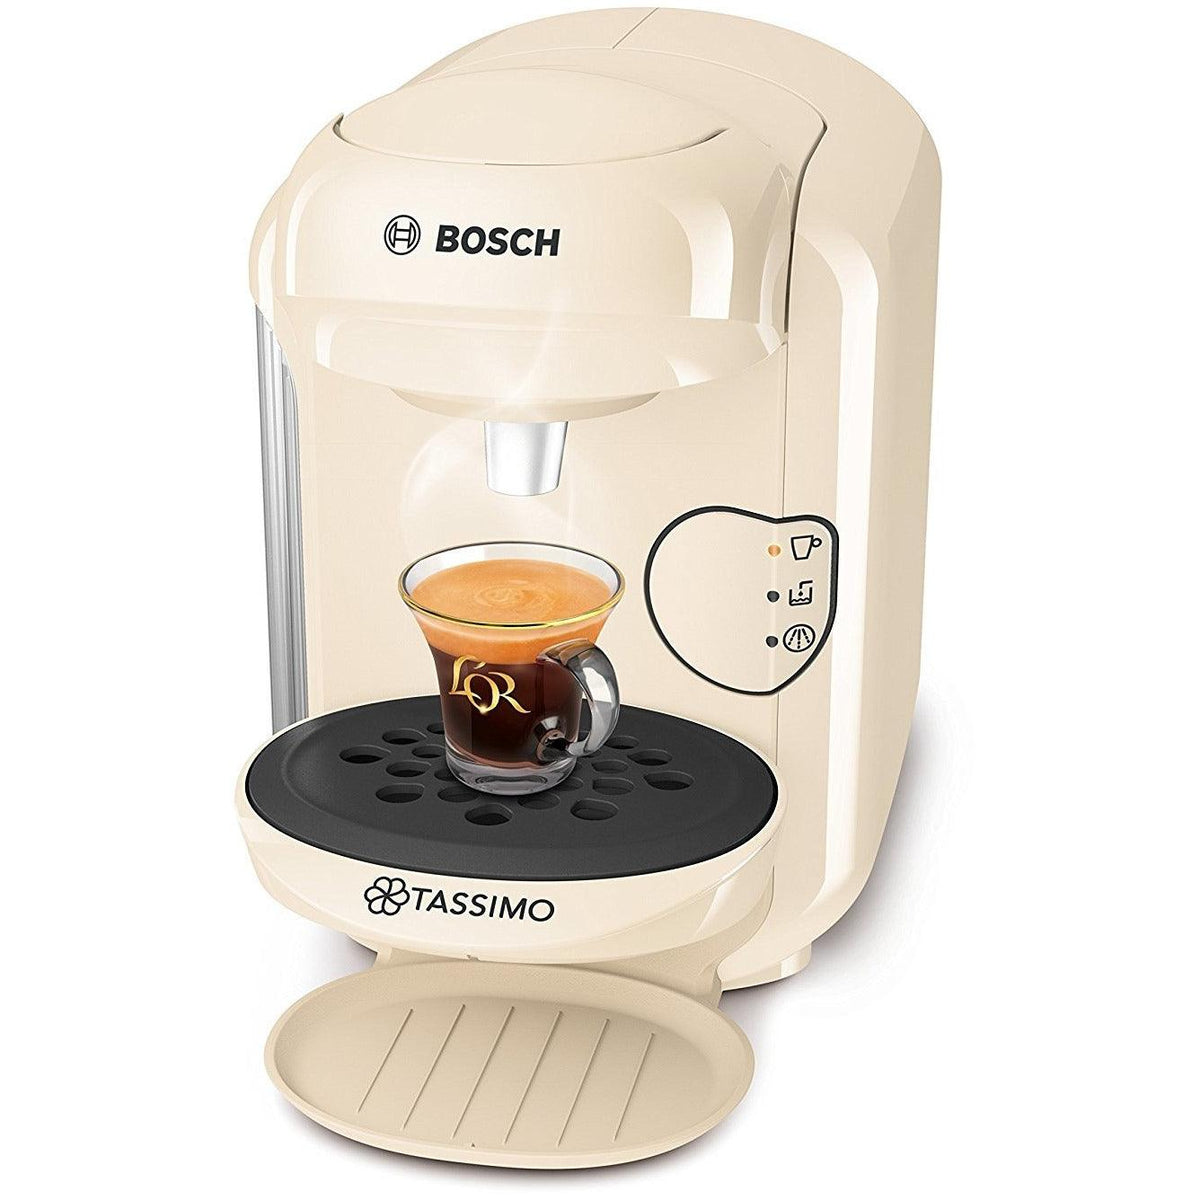 Tassimo Vivy 2 0.7L Pod Coffee Machine - Cream | TAS1407GB from DID Electrical - guaranteed Irish, guaranteed quality service. (6890765287612)